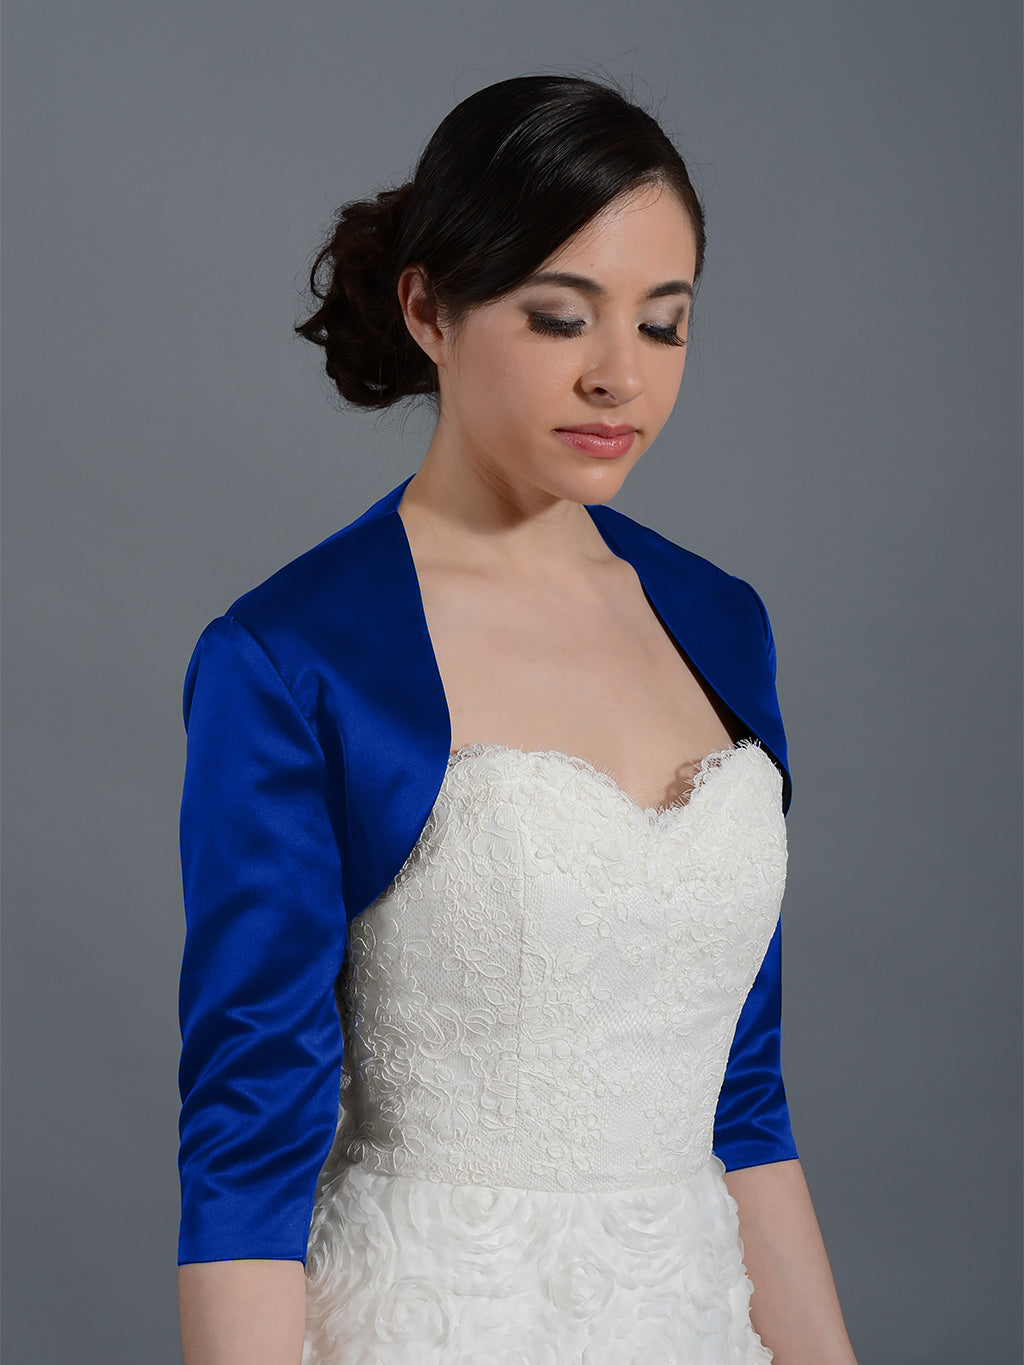 Blue 3/4 sleeve wedding satin bolero jacket